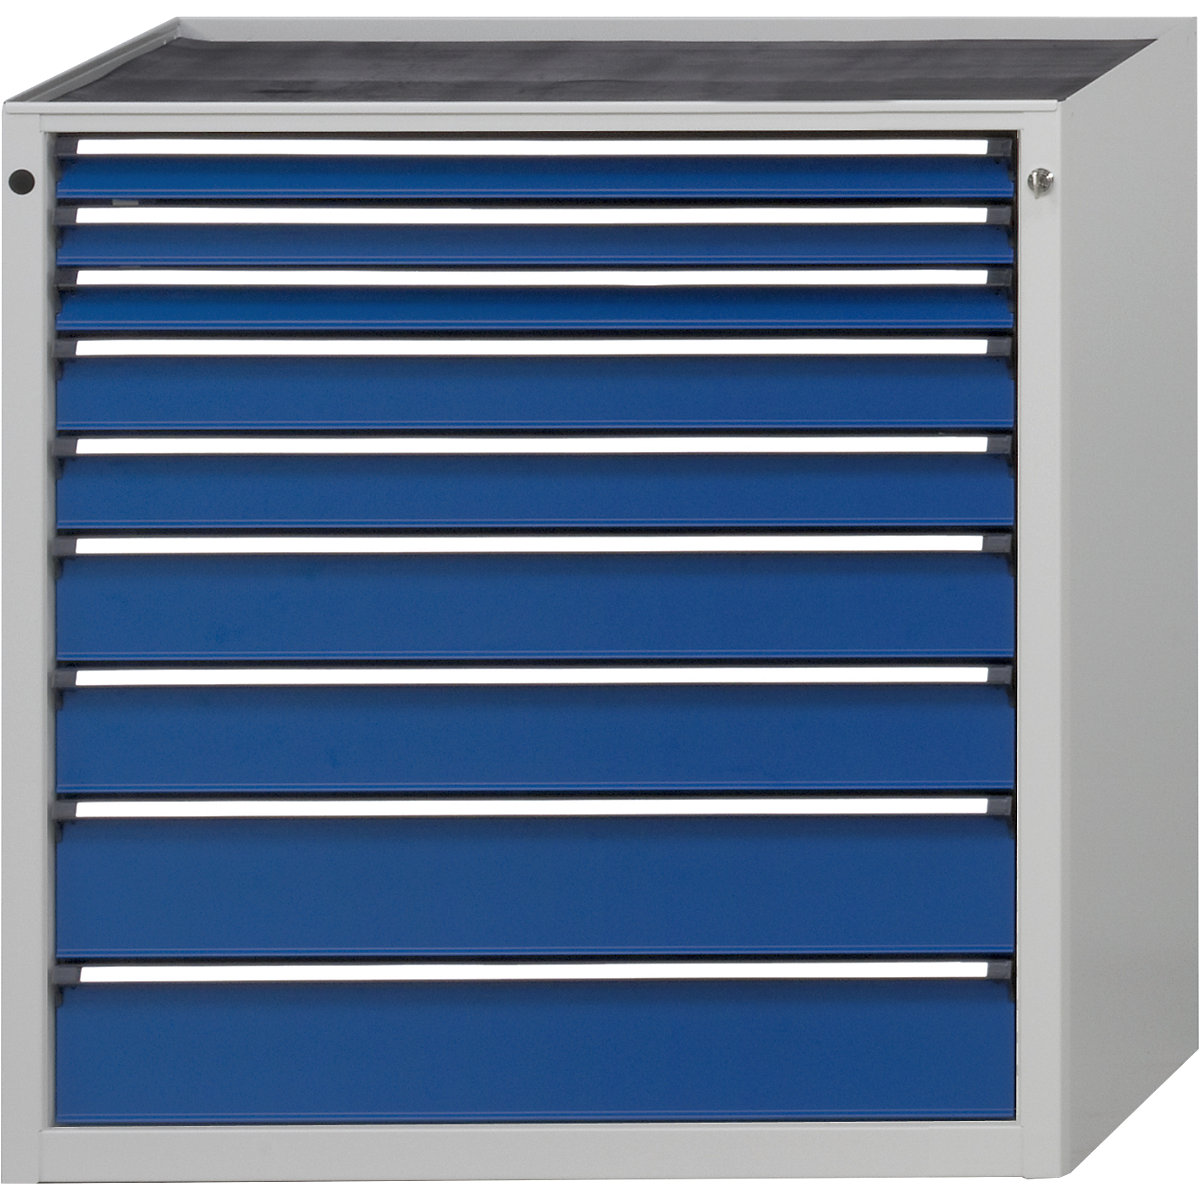 ANKE – Armoire à tiroirs, l x p 910 x 675 mm, 9 tiroirs, hauteur 980 mm, façade bleu gentiane